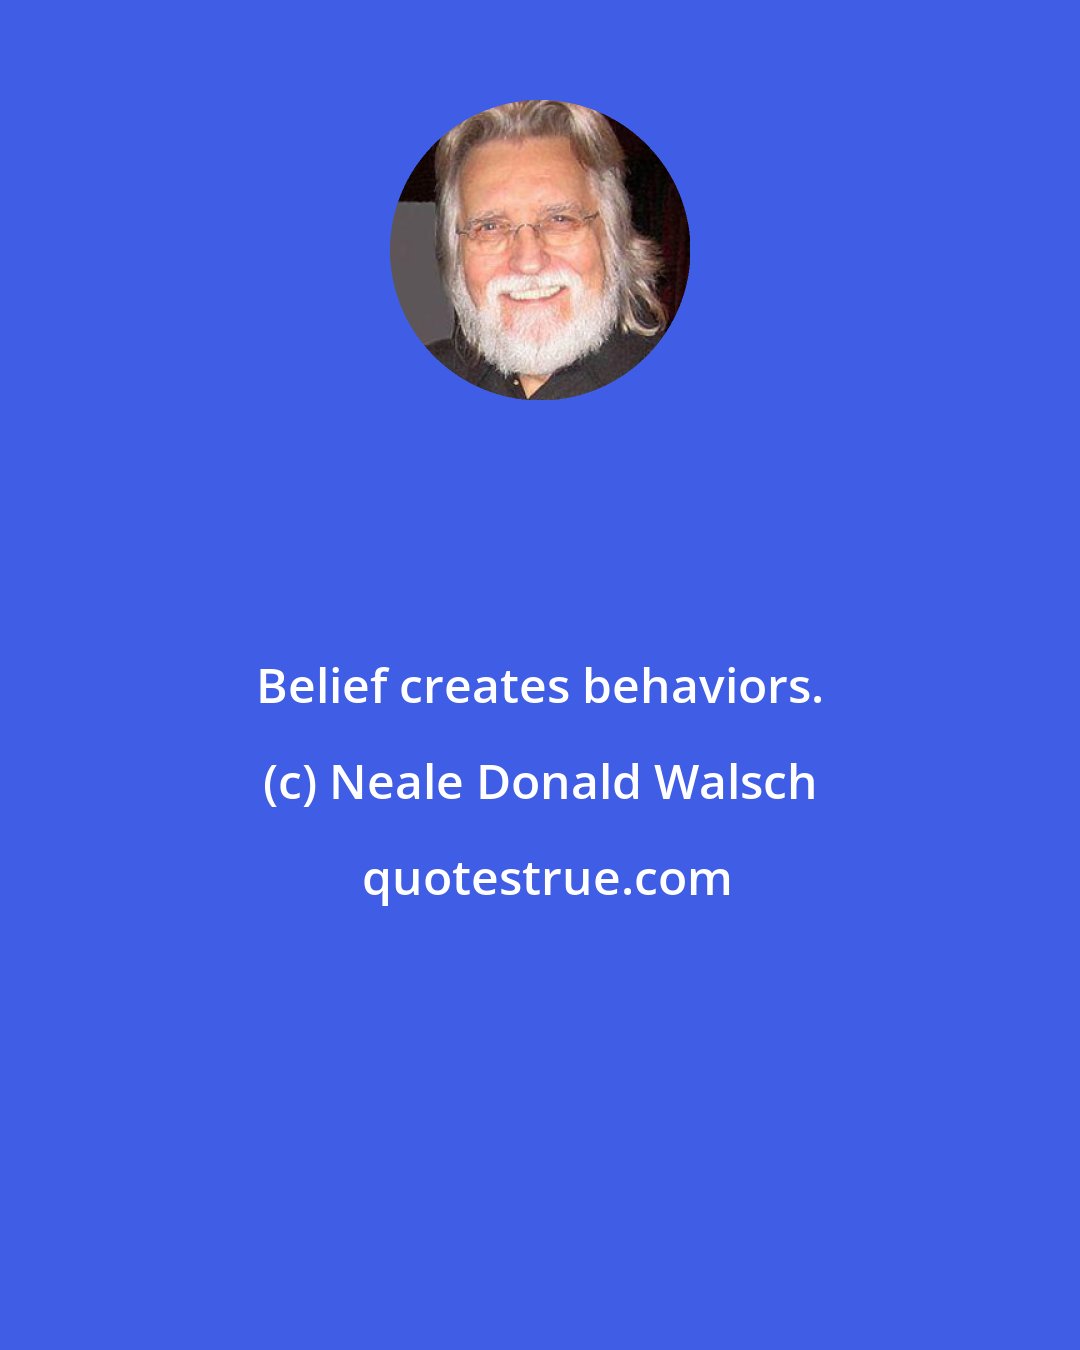 Neale Donald Walsch: Belief creates behaviors.